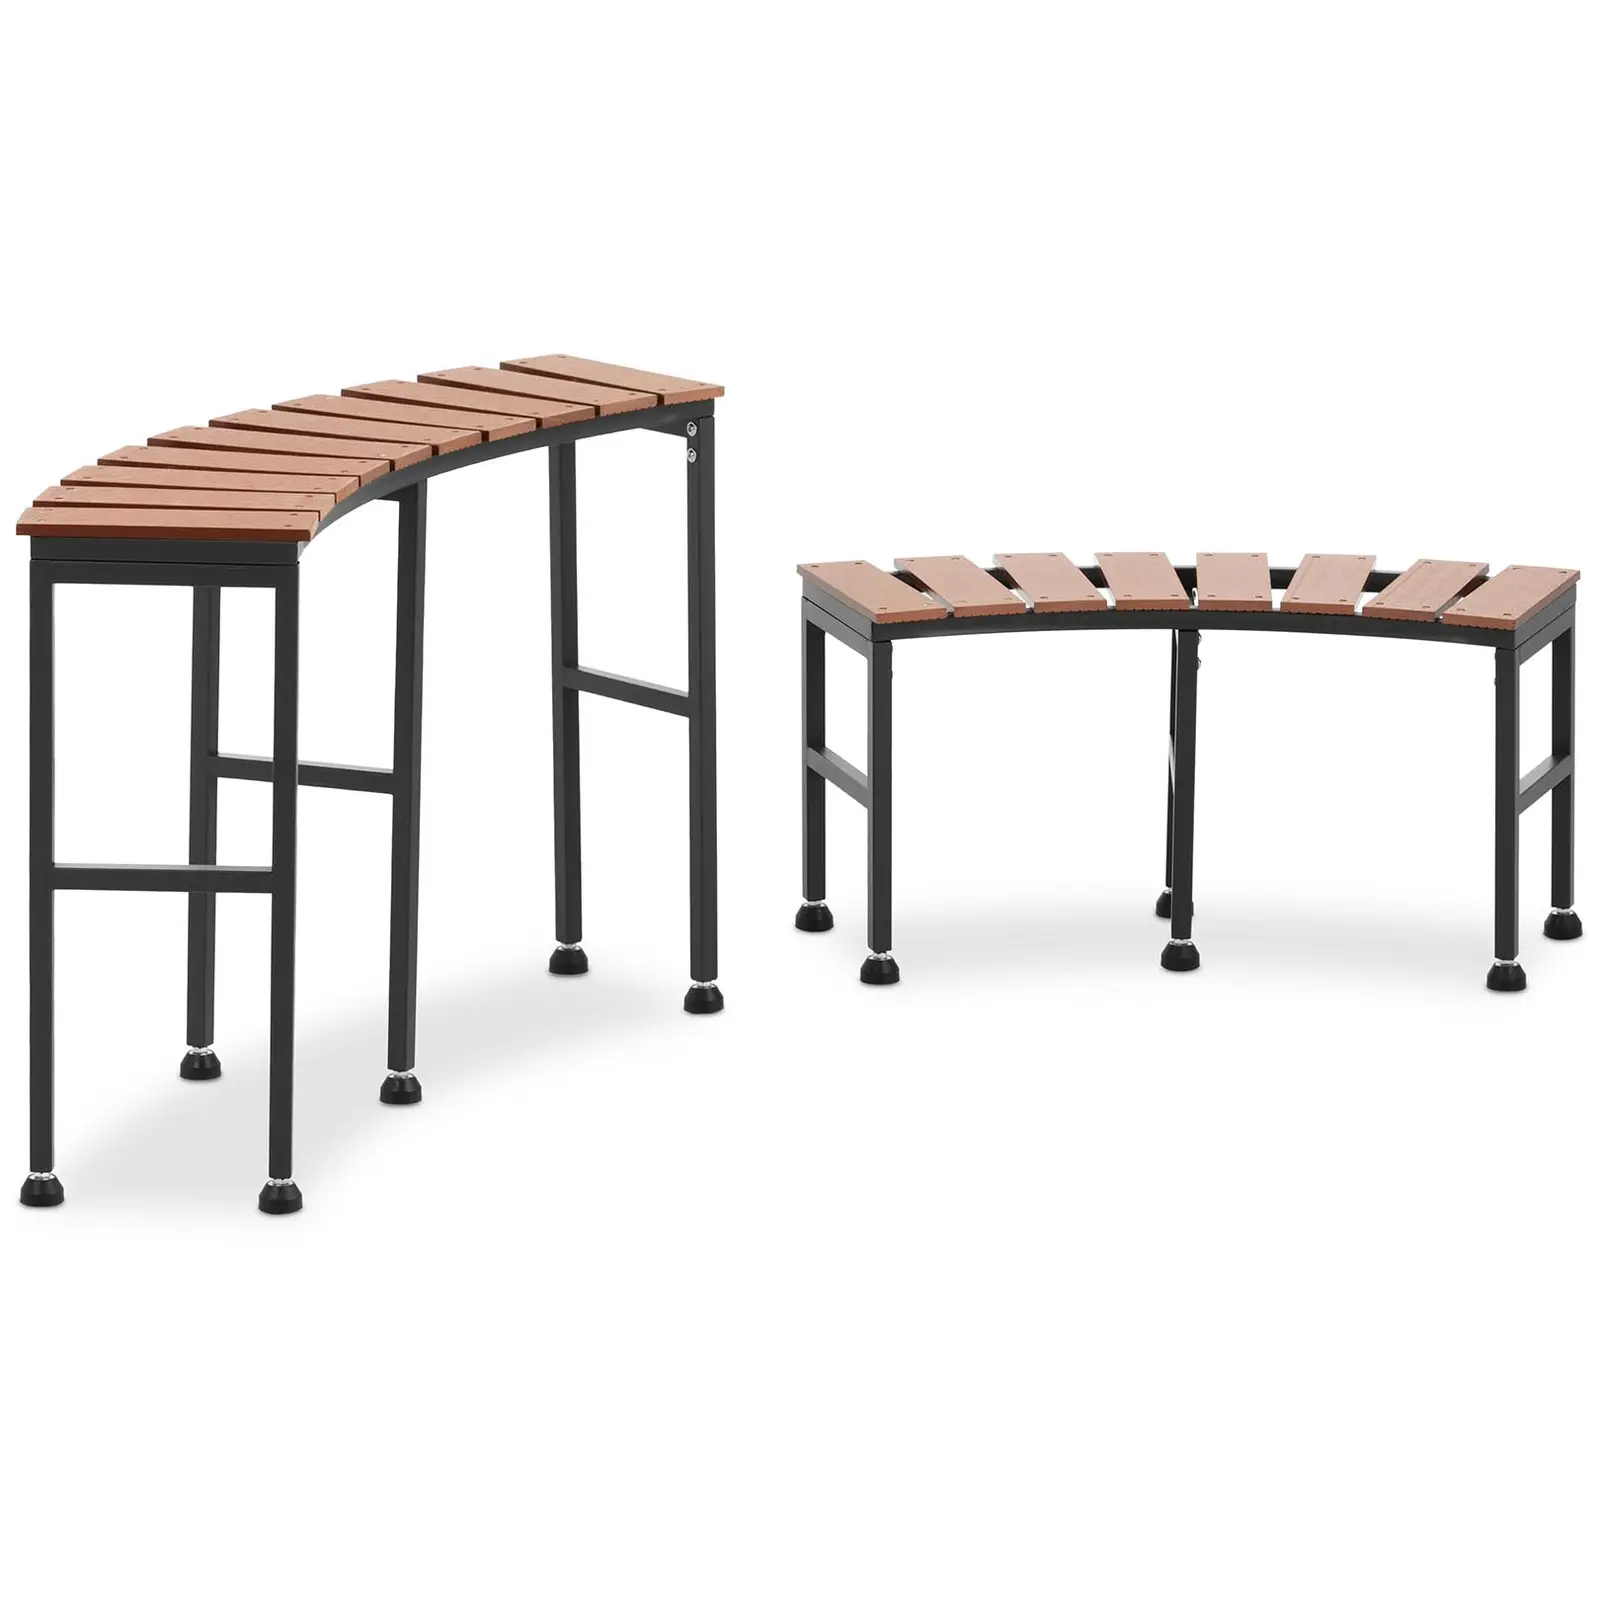 Spa Surrounding - 78 x 25 x 60 - round - steel / wood plastic - brown